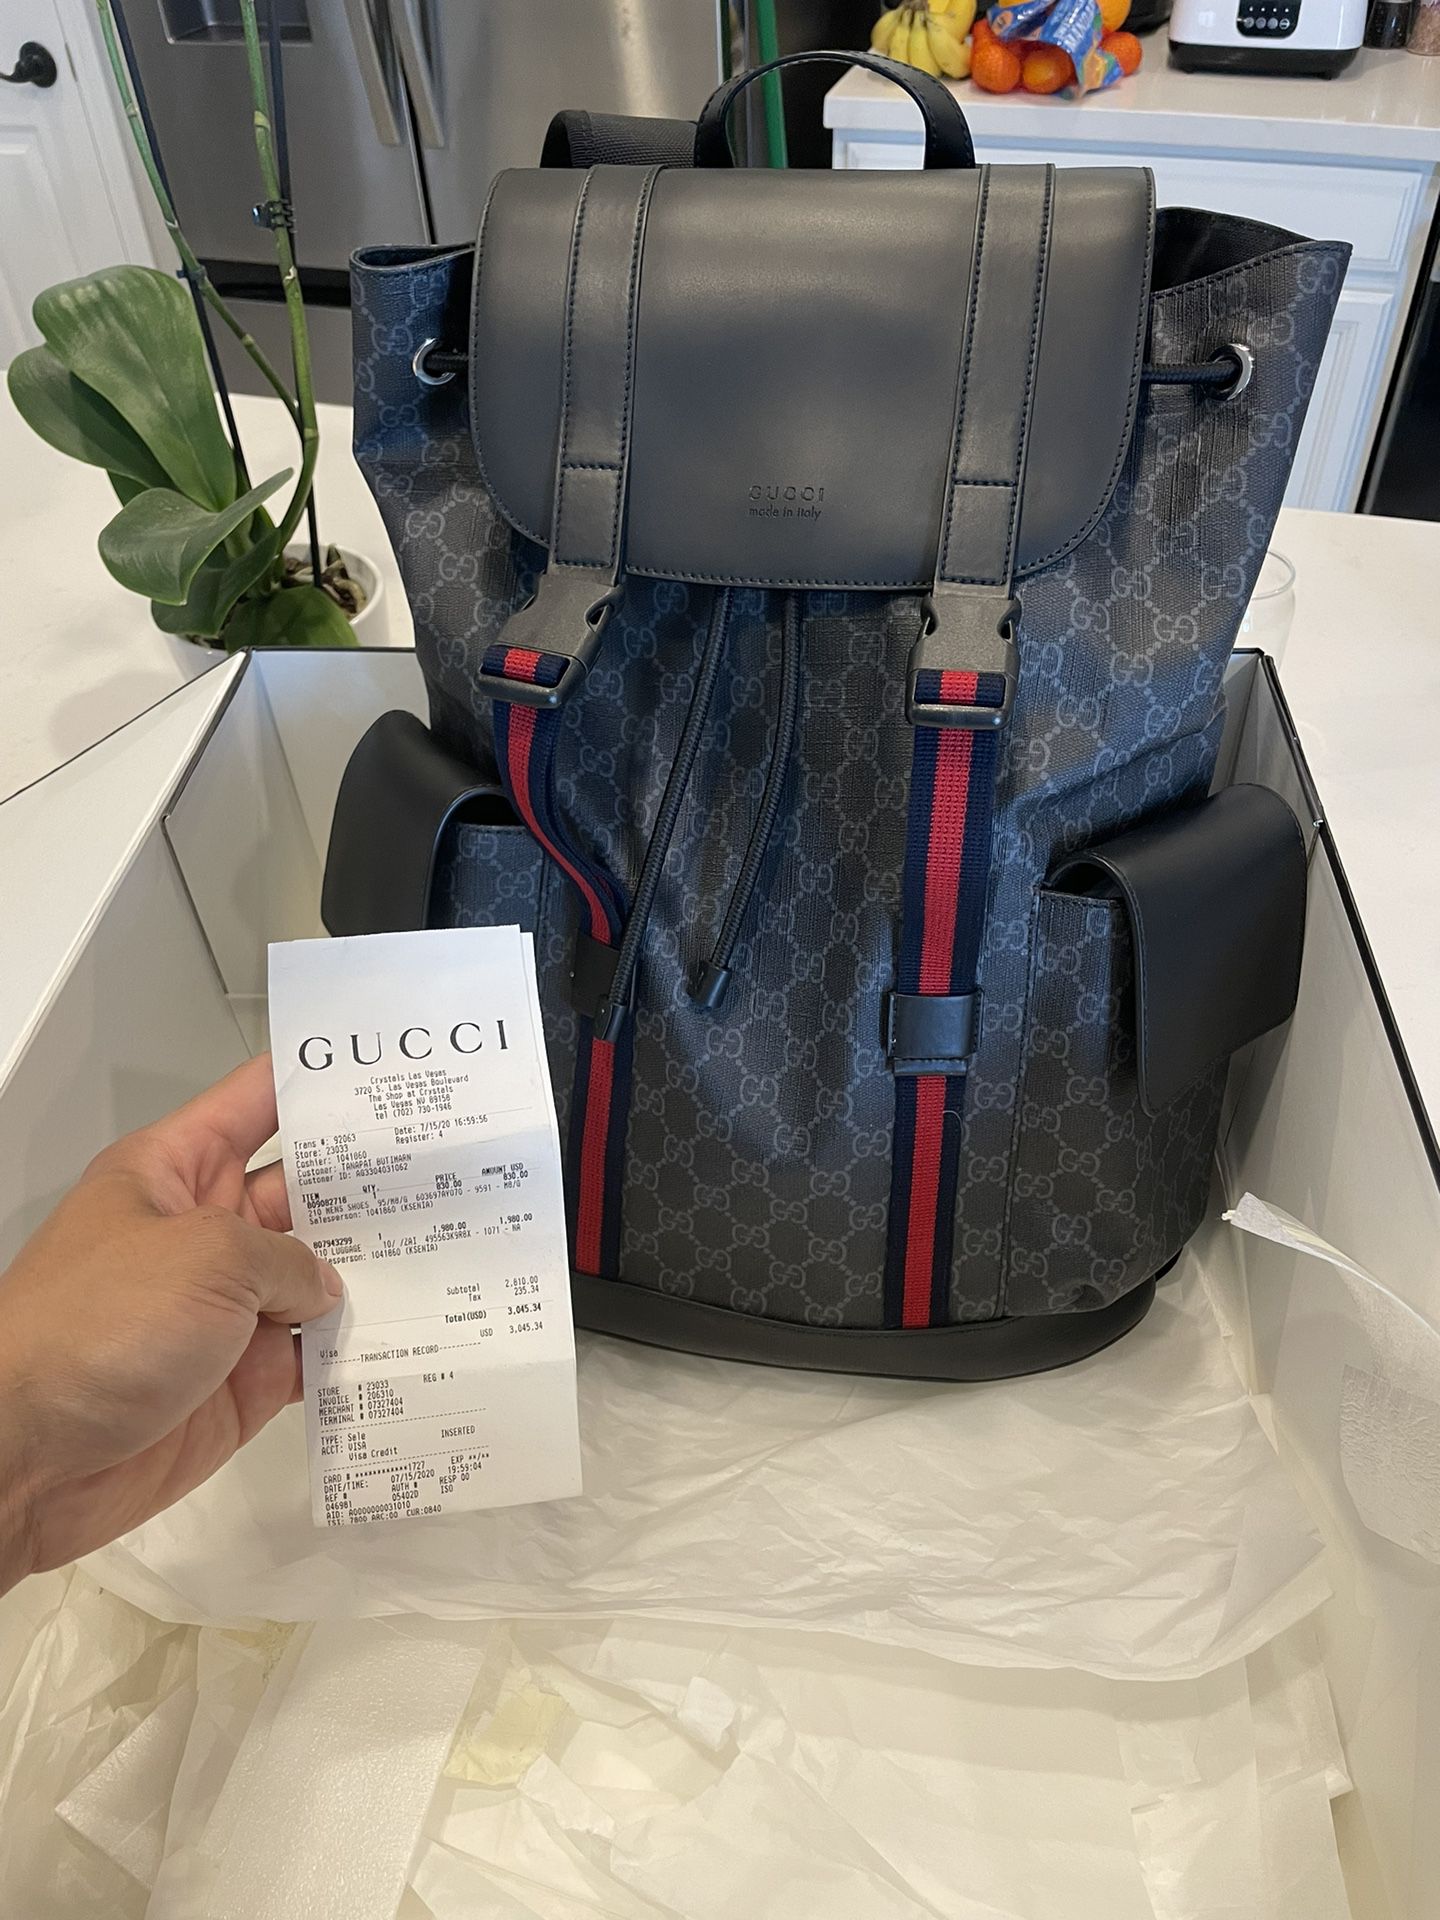 Gucci Men’s Backpack W/ Receipt! 